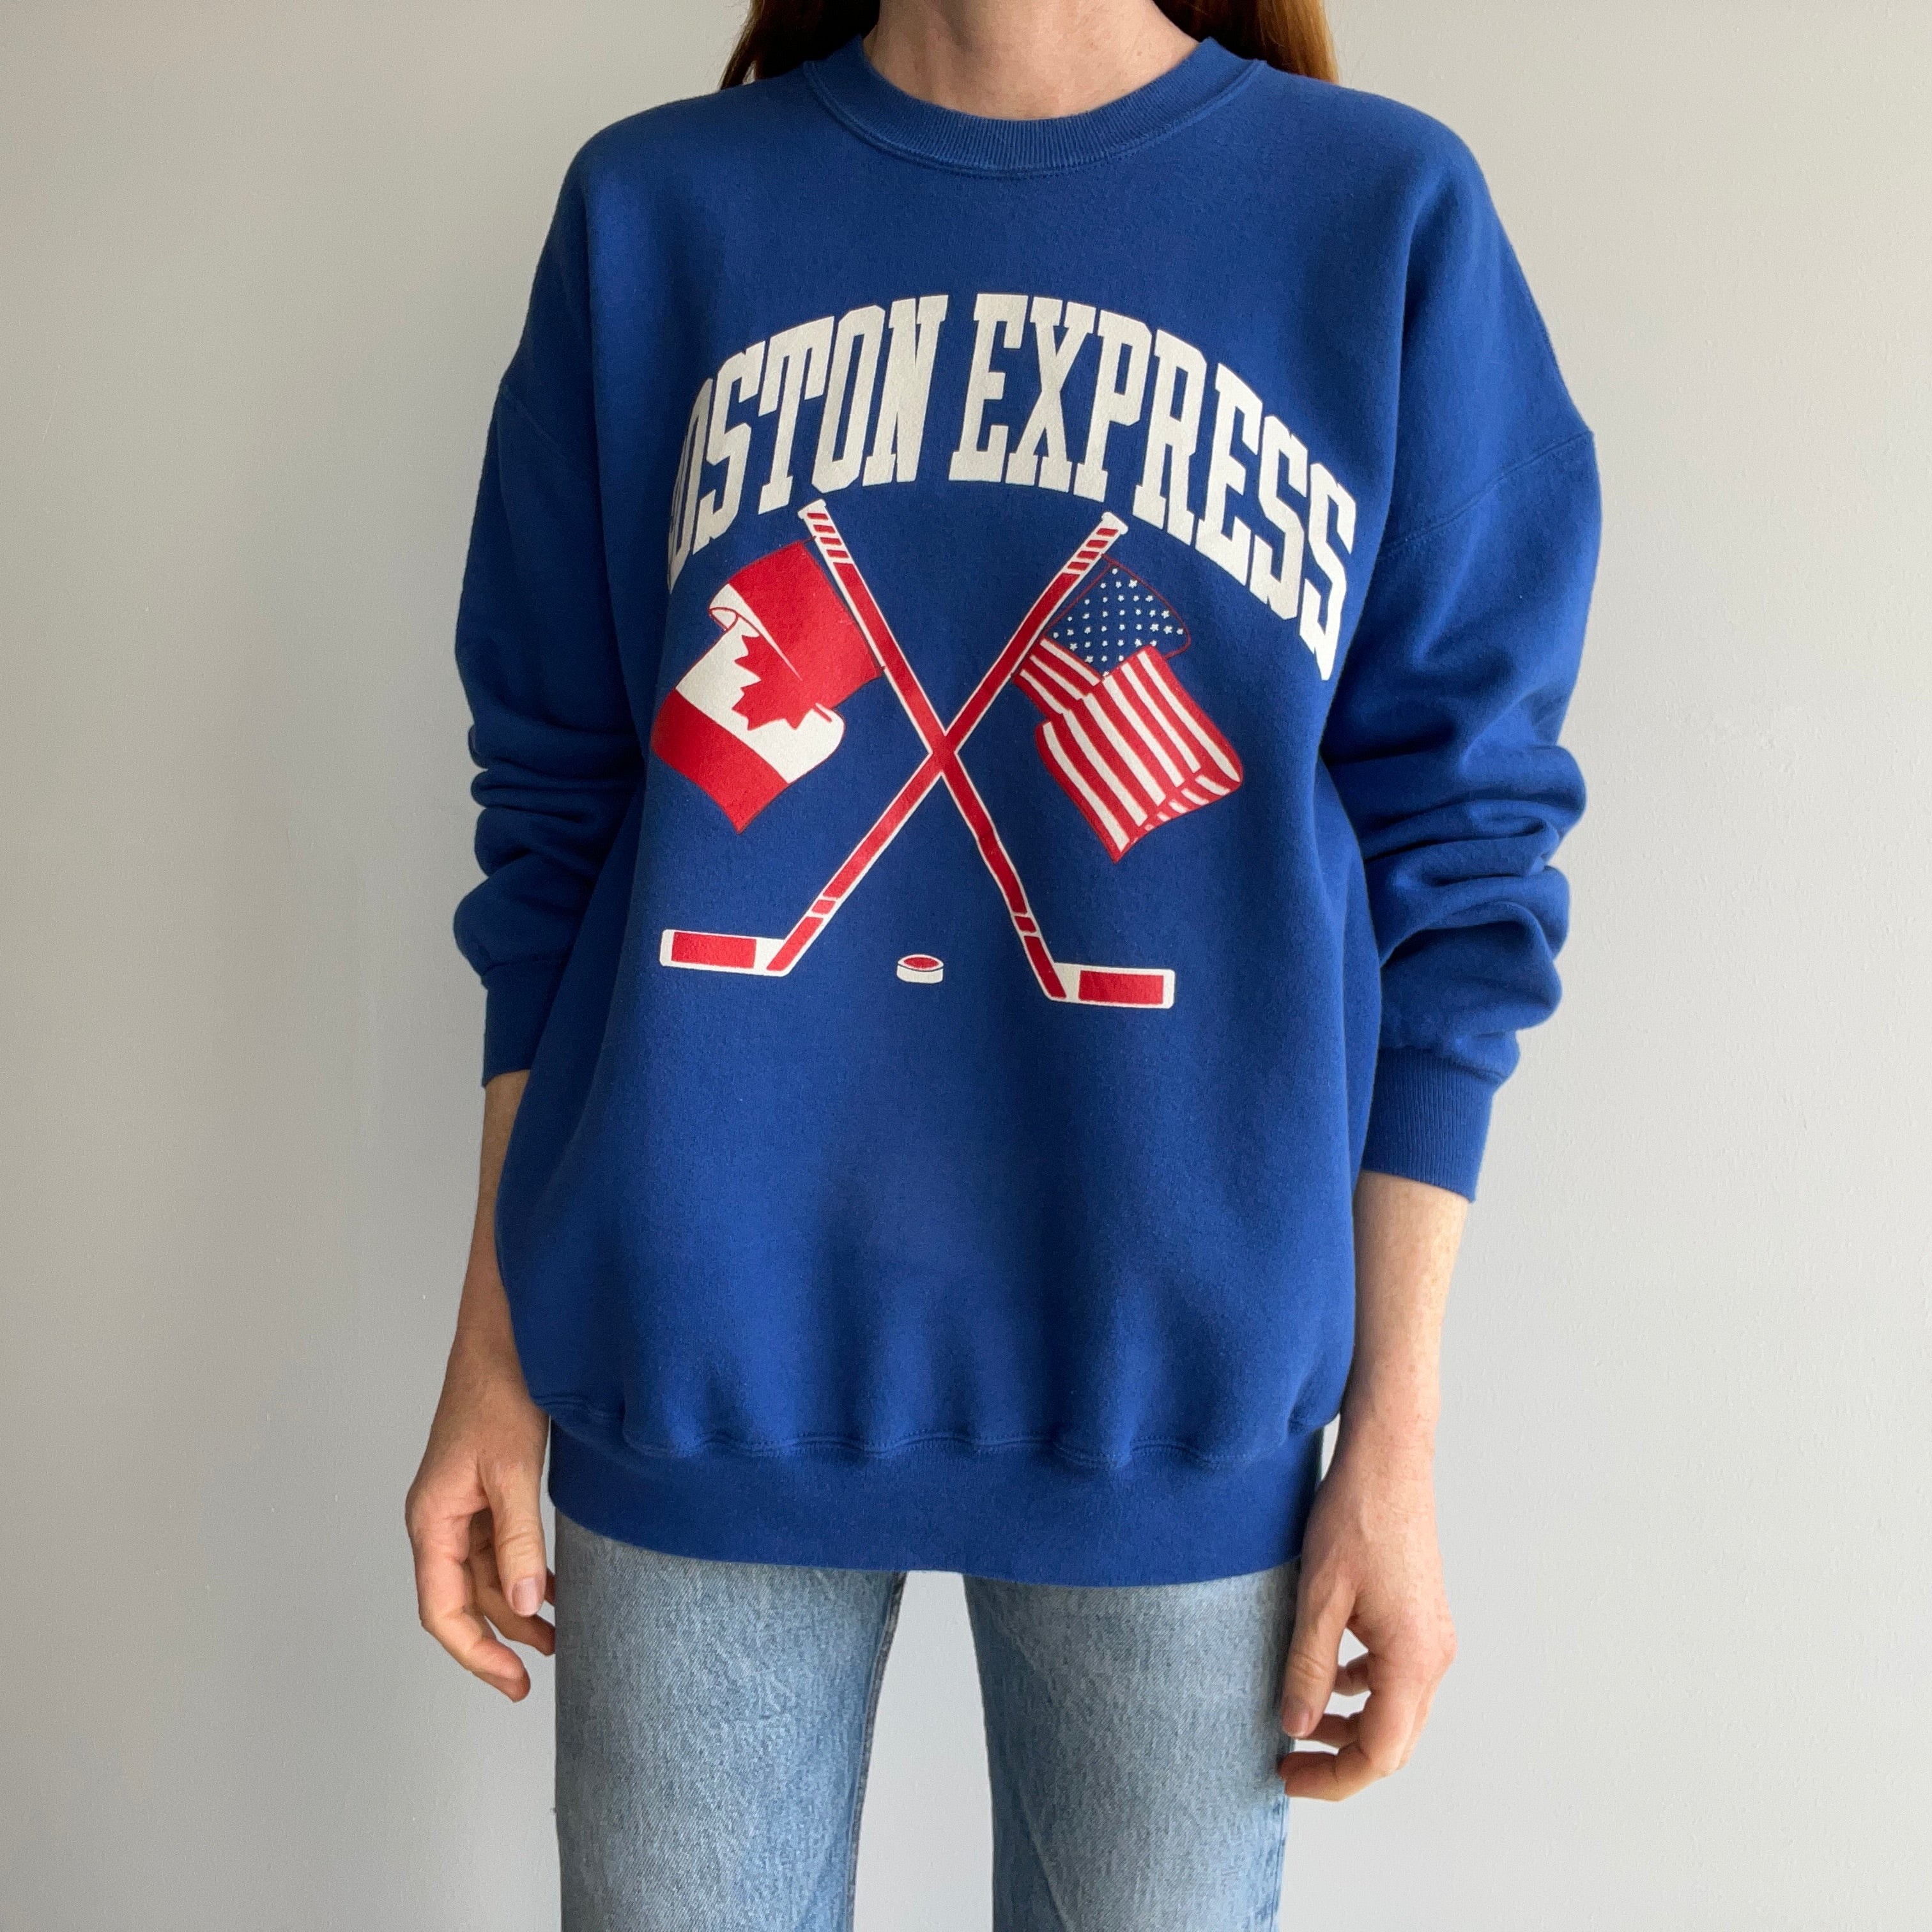 1980/90s Boston Express Hockey Sweatshirt